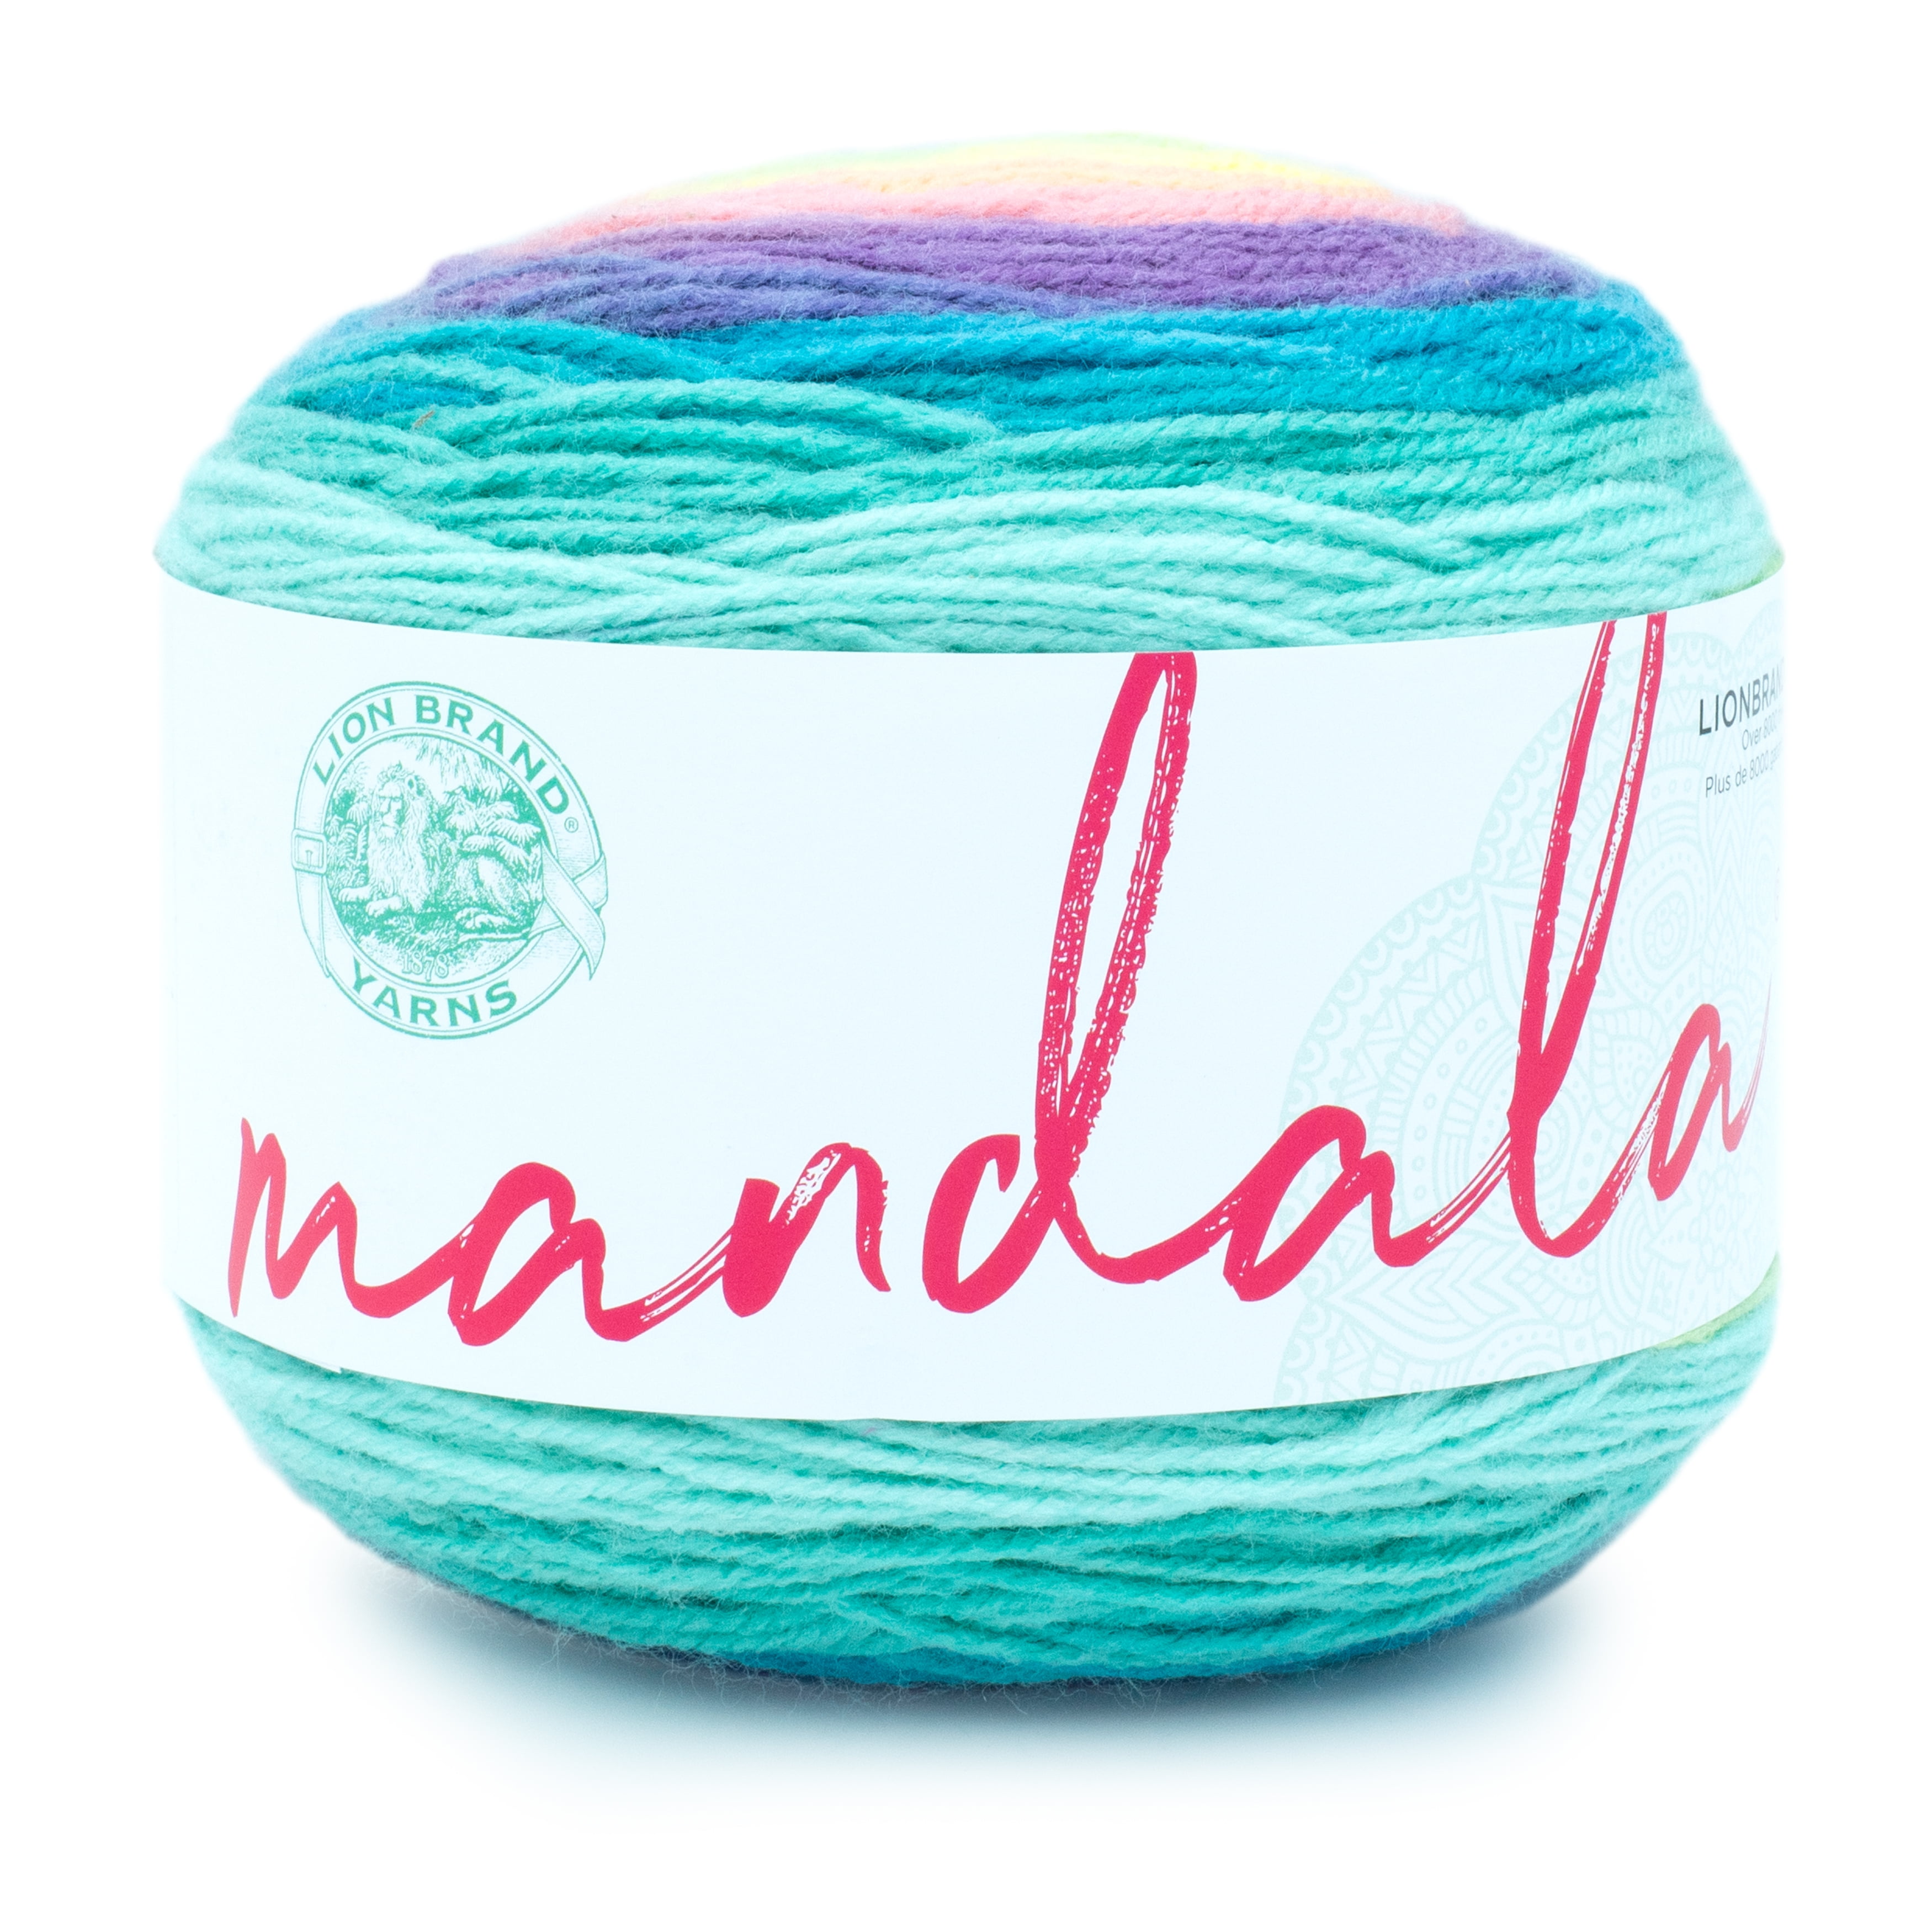 Lion Brand Yarn Mandala Nifflers Self-Striping Light Acrylic Multi-color  Yarn